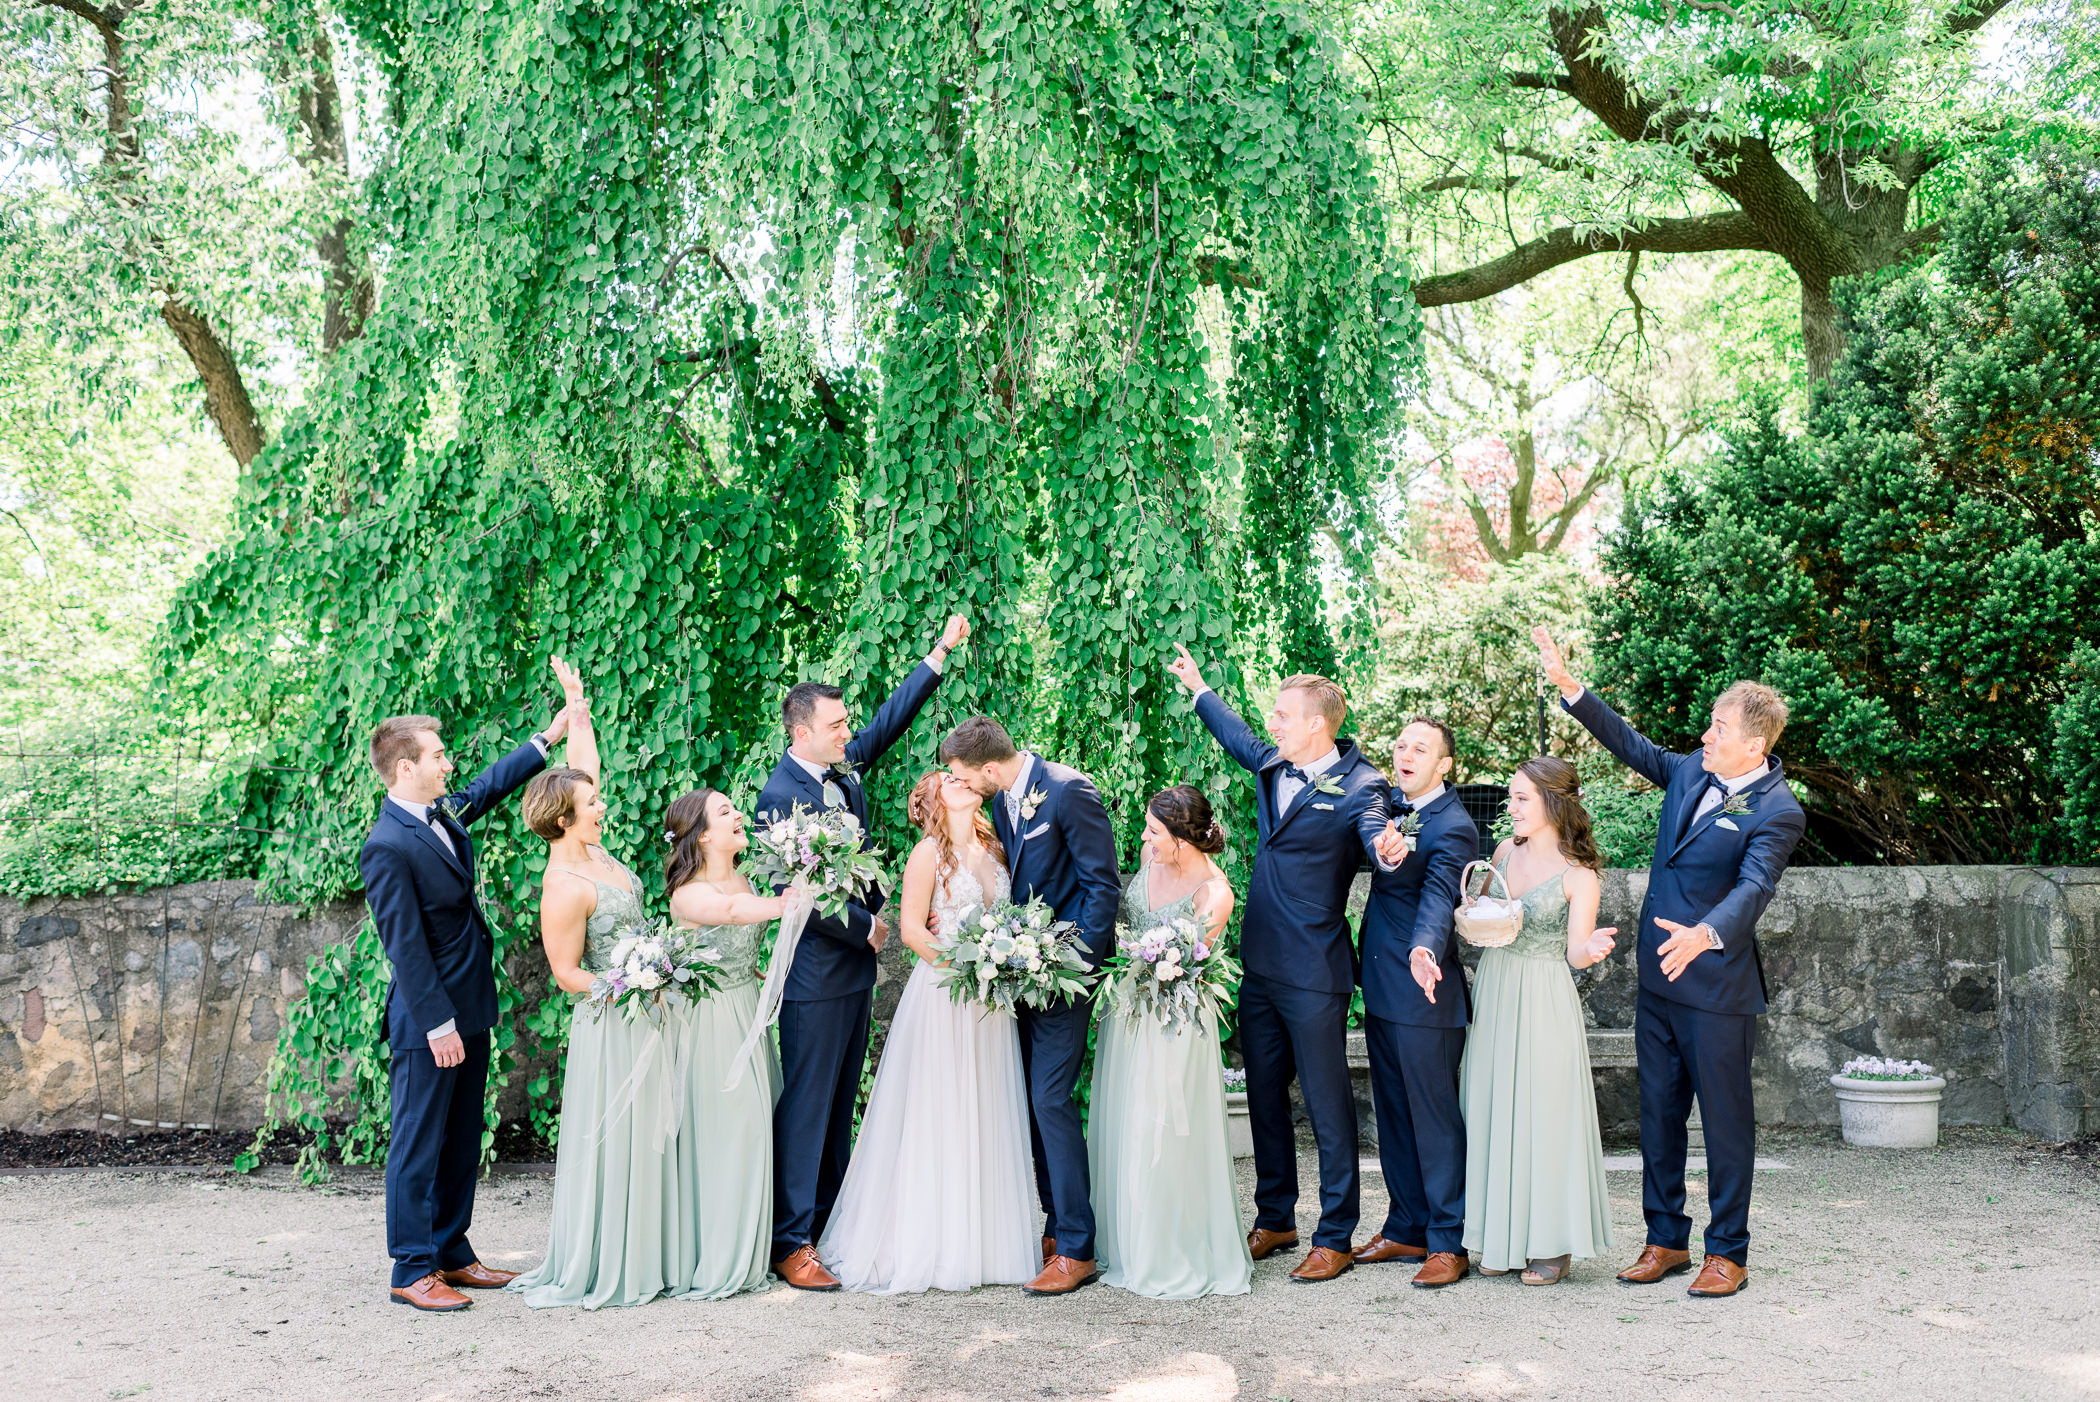 Boerner Botanical Gardens Wedding Photographers